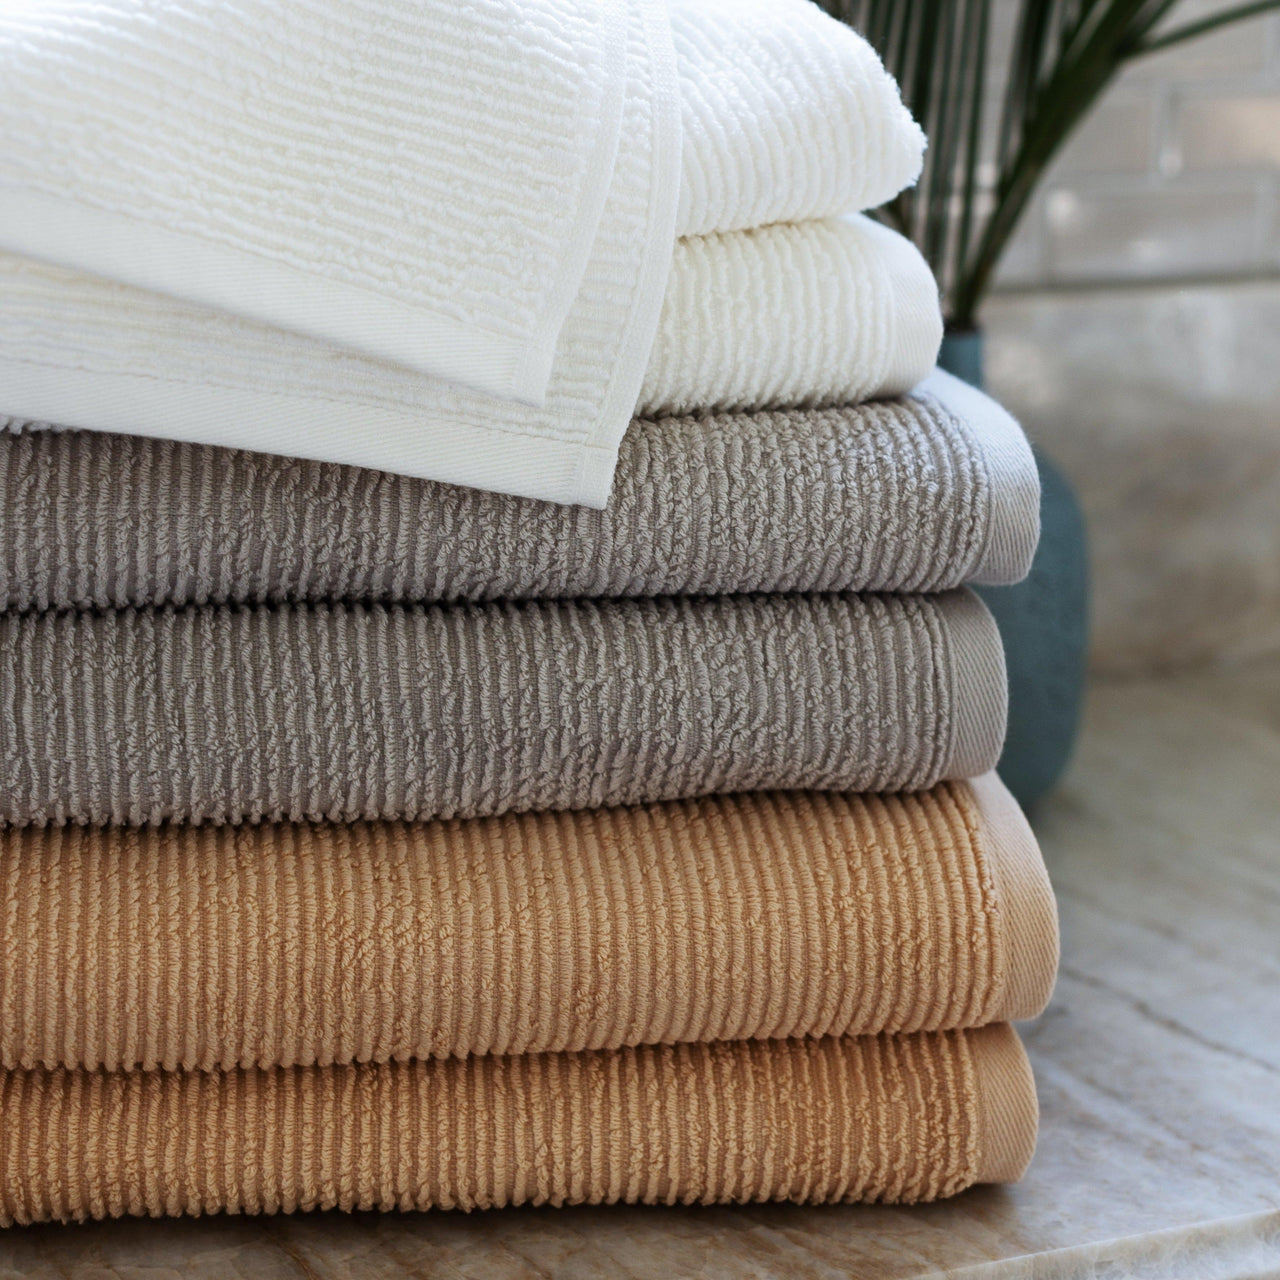 Framsohn Terry Cloth Towel Ma Belle Topas - Interismo Online